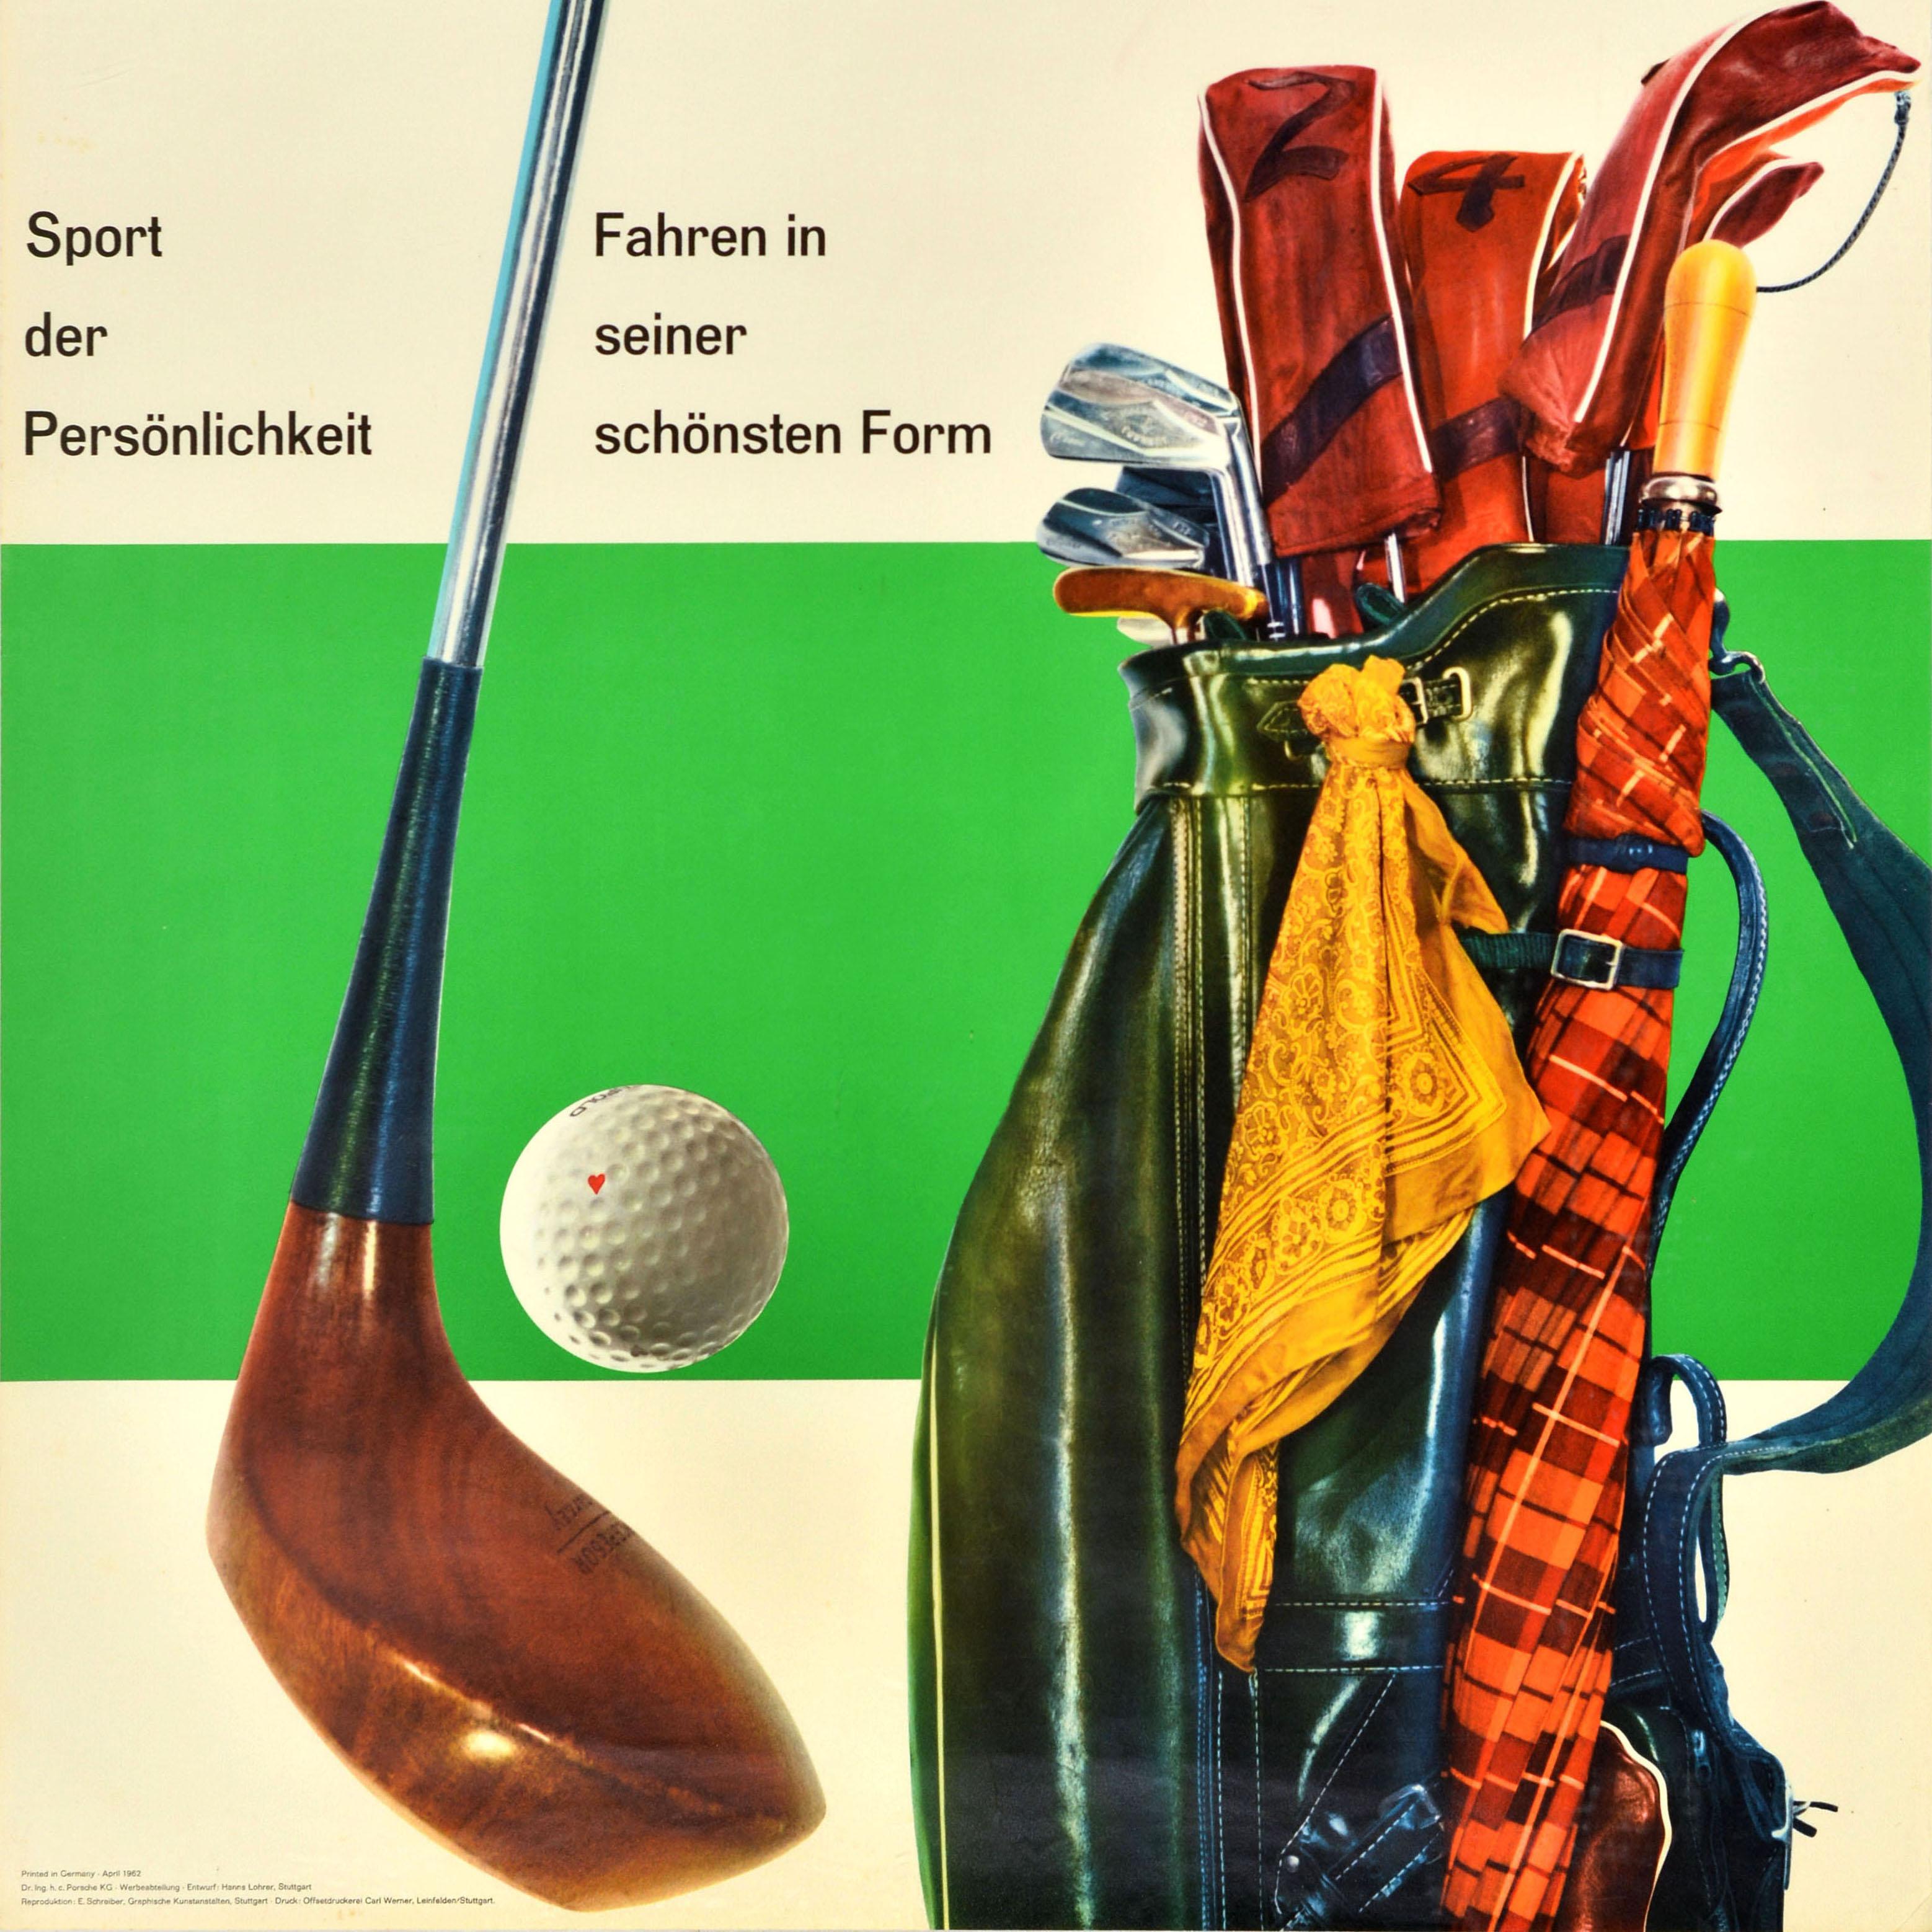 Original Vintage Car Advertising Poster Porsche Golf Sport Of Personality Lohrer - White Print by Hanns Lohrer